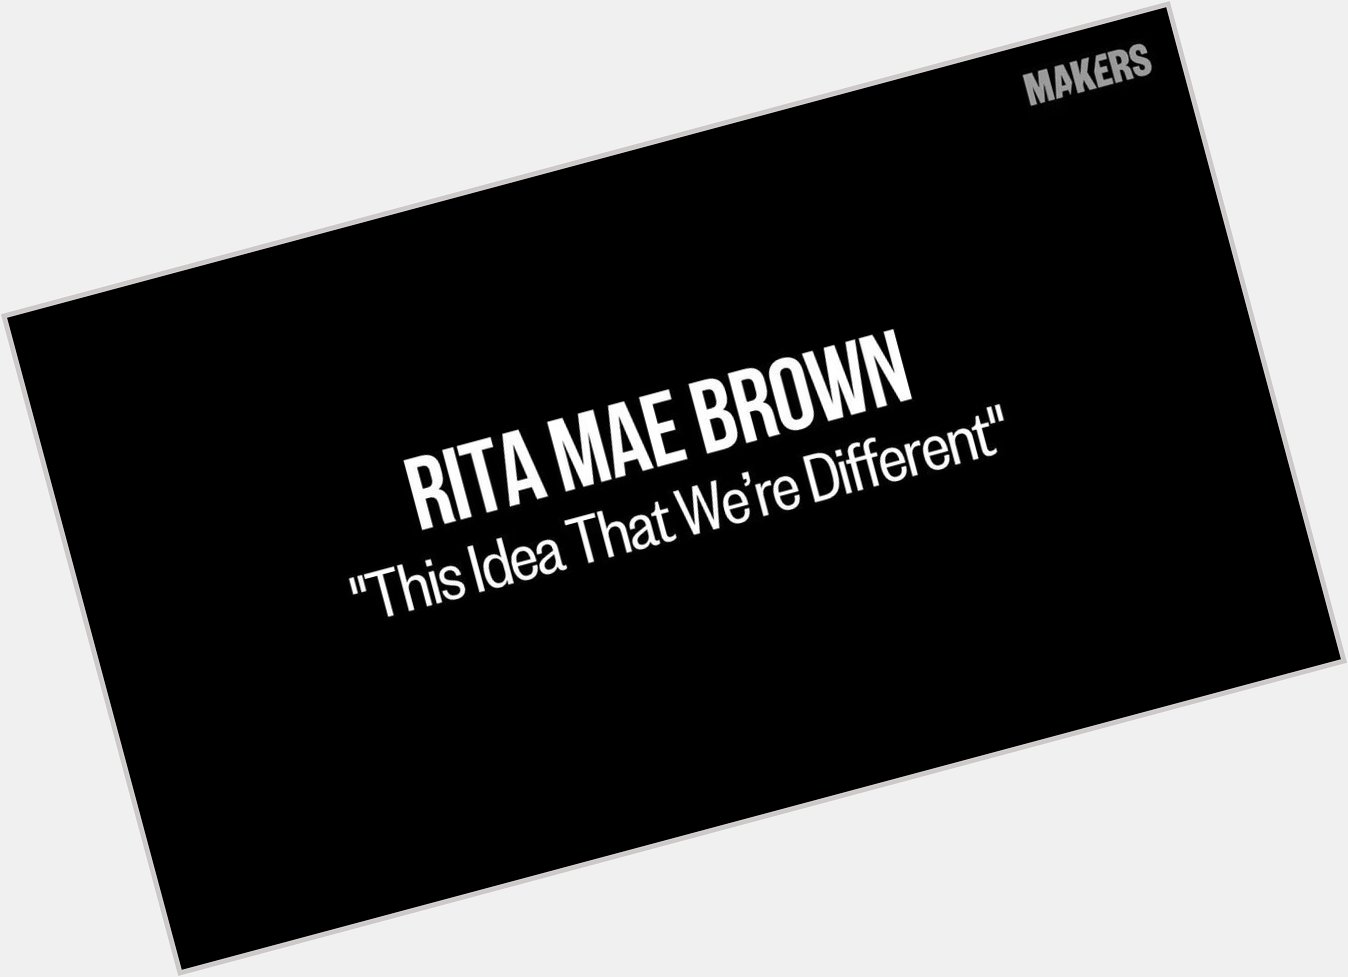 Happy birthday to author and activist Rita Mae Brown! 